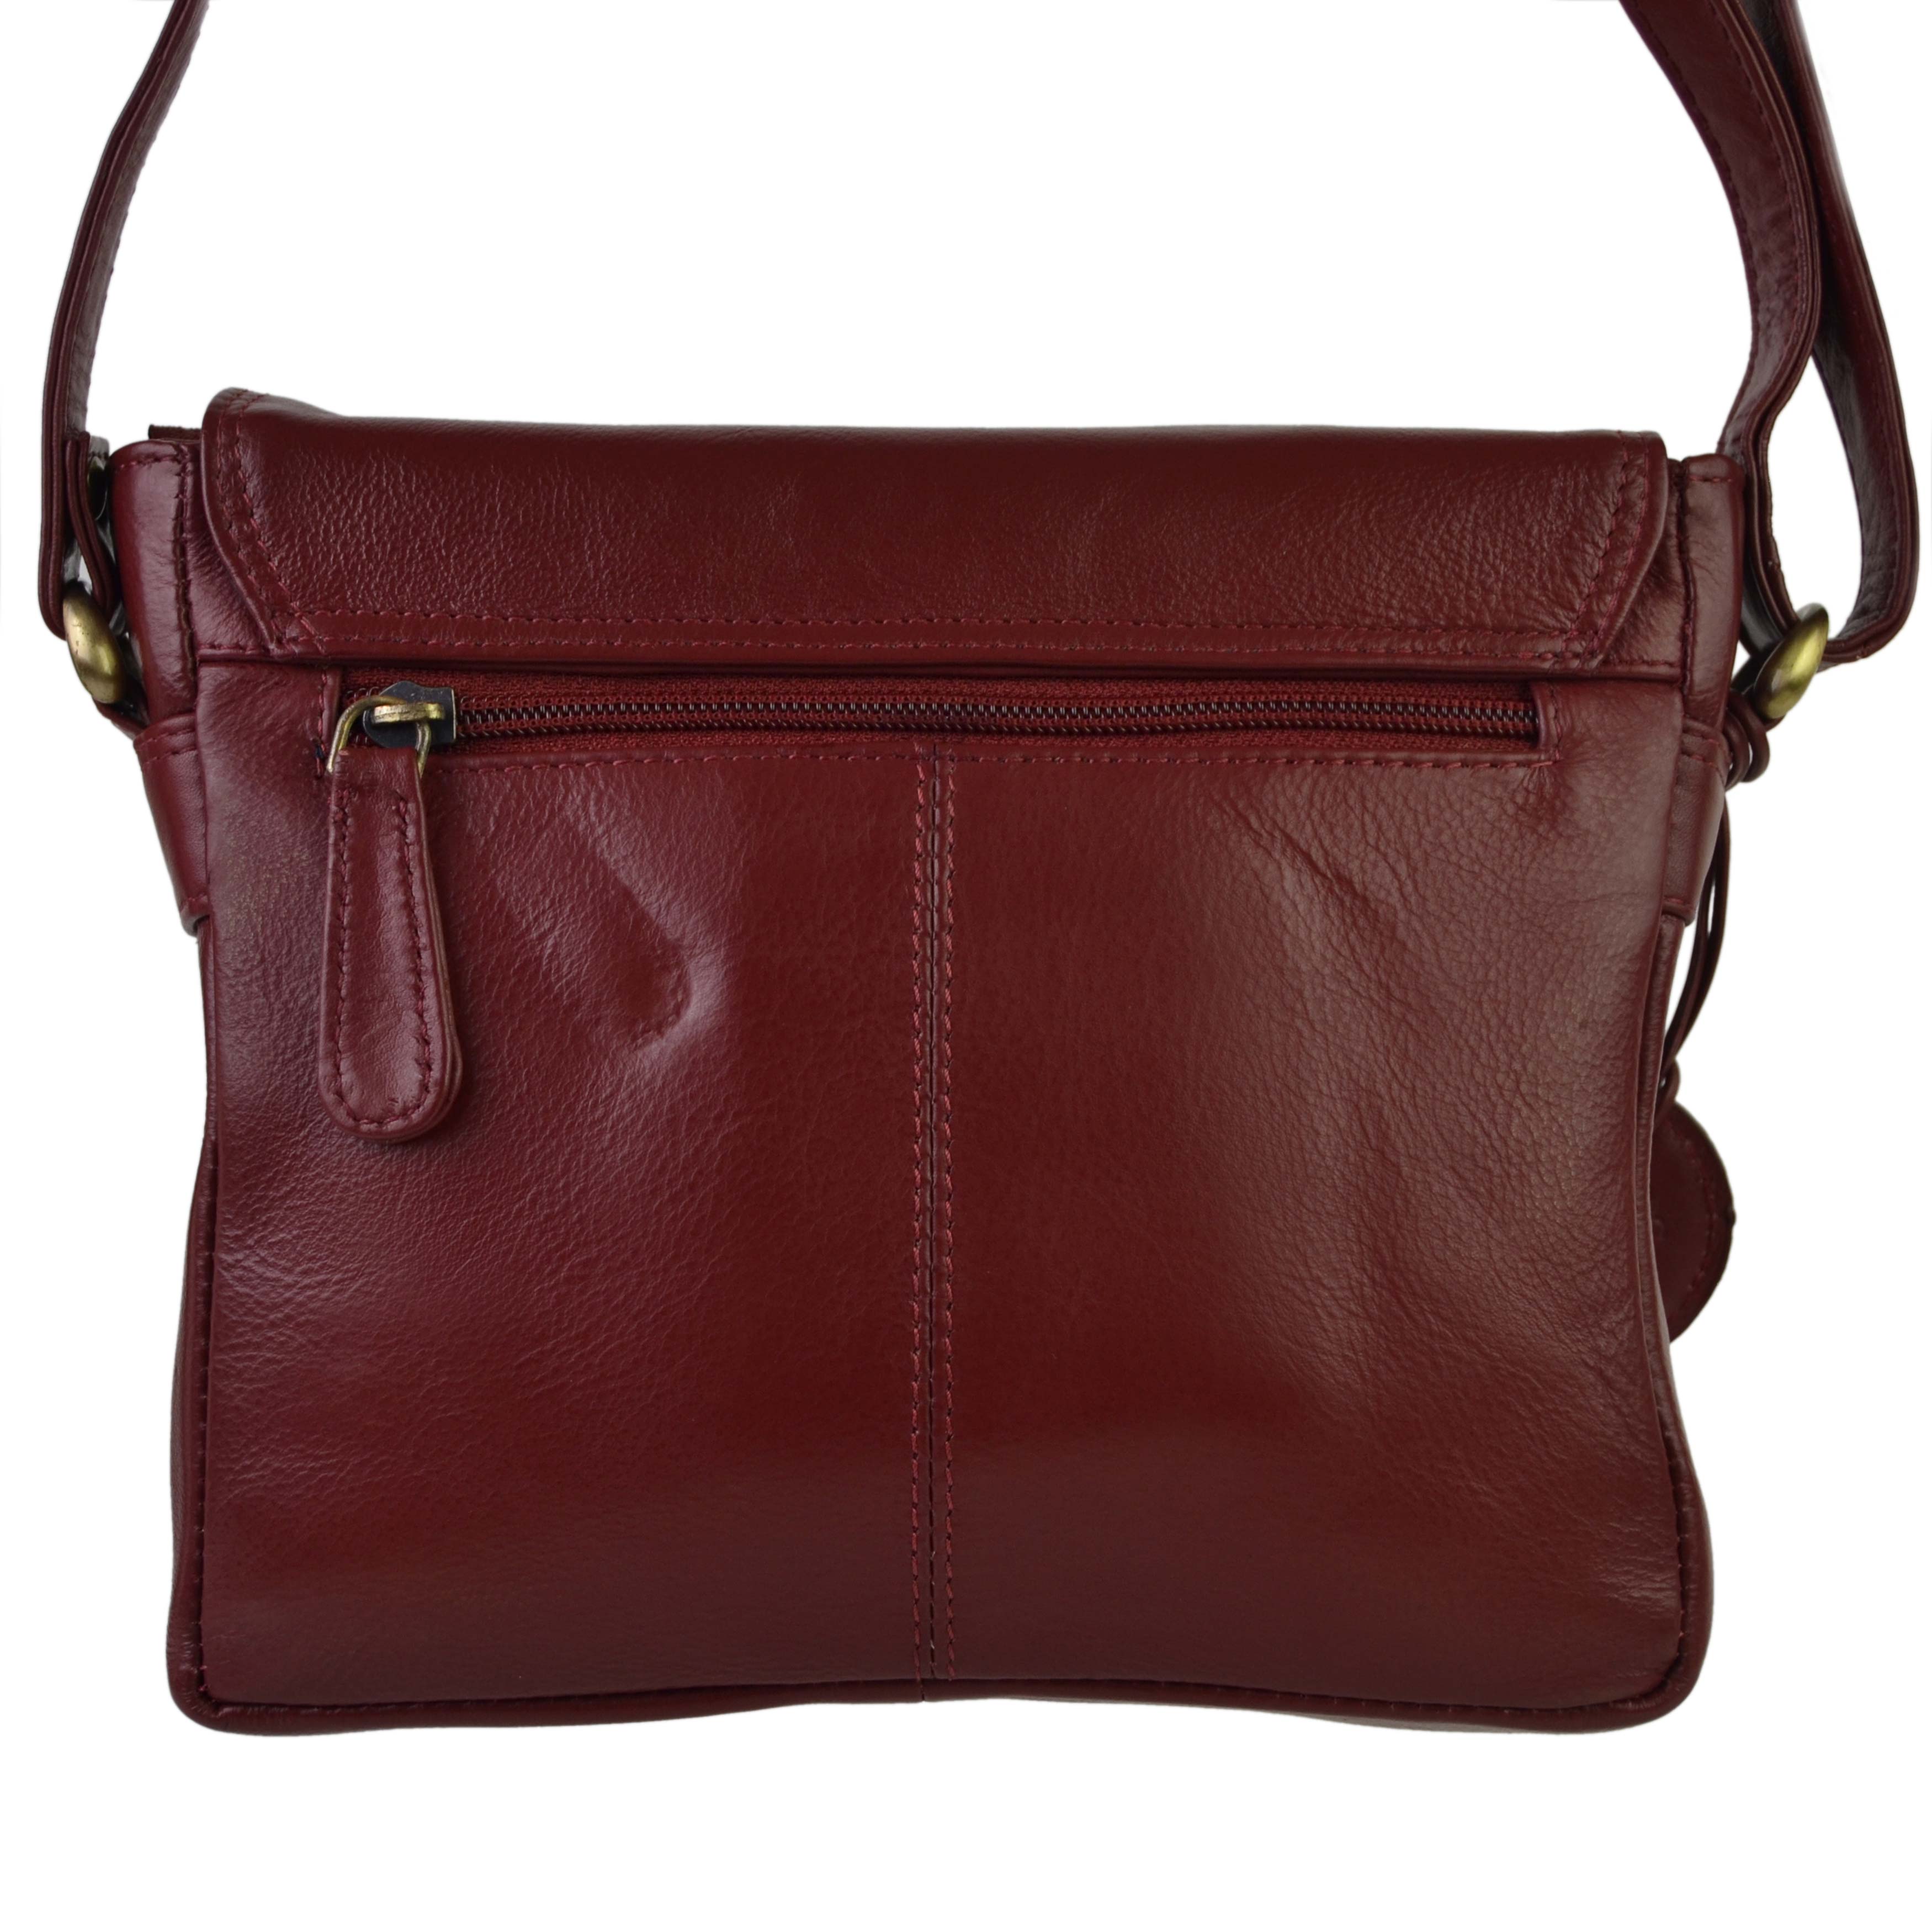 Hansson Leather Ladies Cross Body Handbag Nordic Blue Collection | eBay